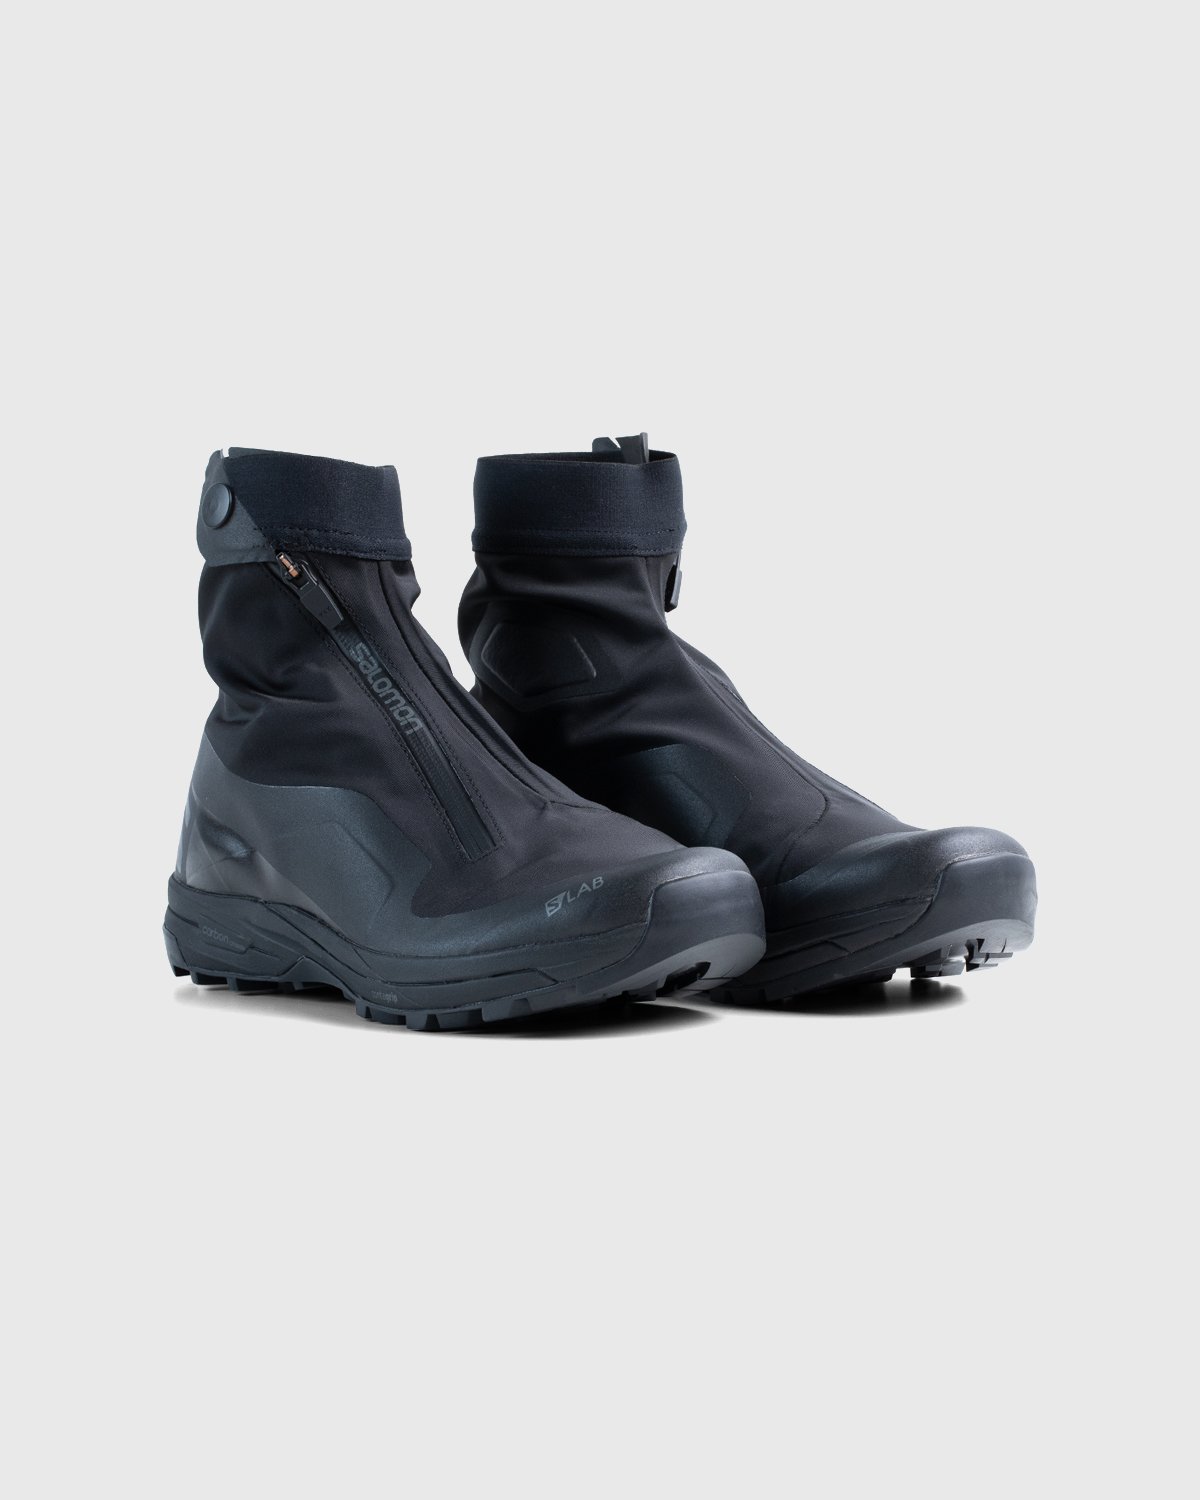 Salomon - S/Lab XA-Alpine 2 Limited Edition Black - Footwear - Black - Image 2